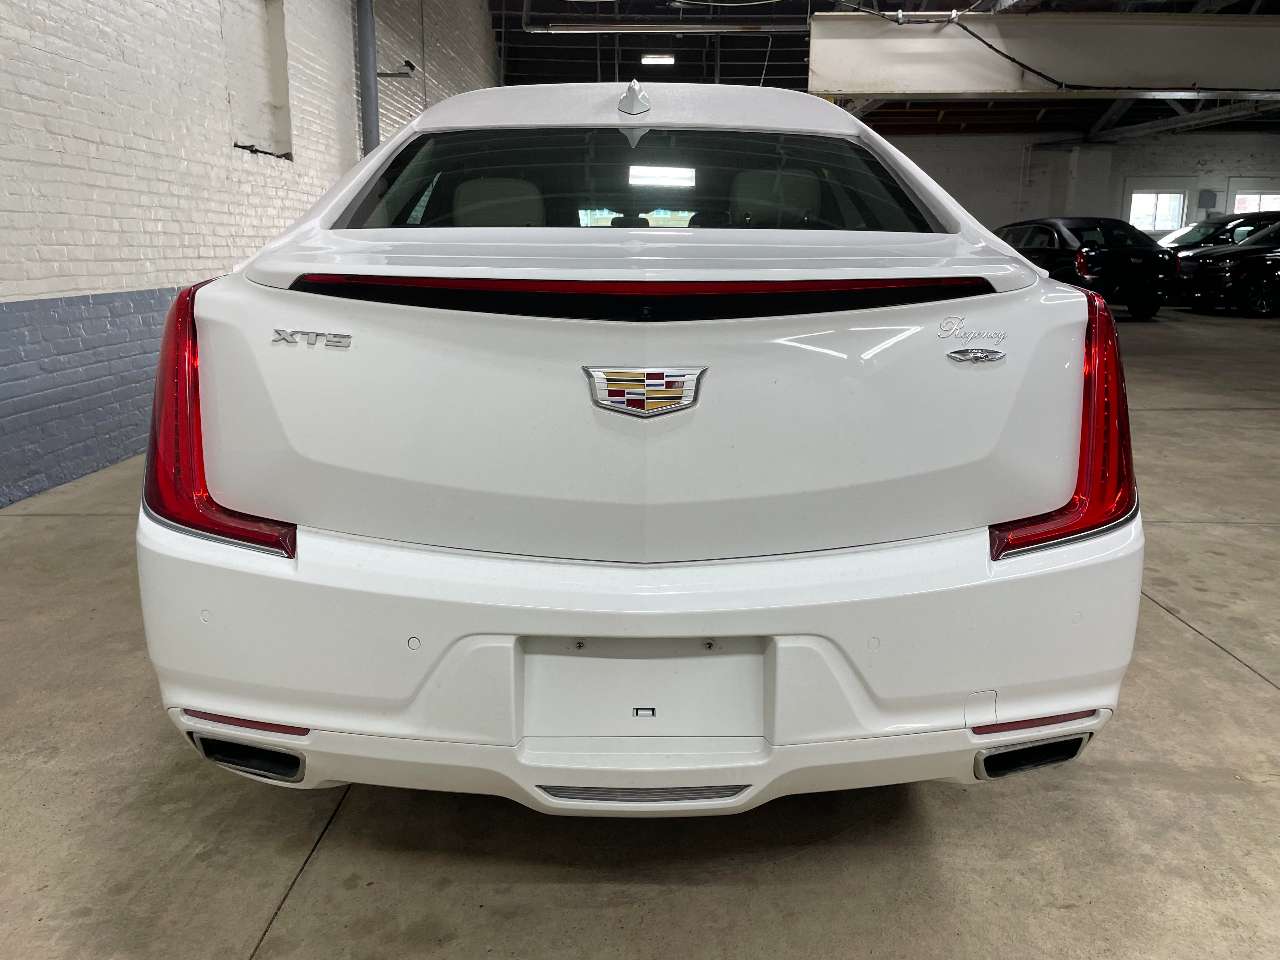 2019 Cadillac Eagle Kingsley Limousine 1695743845264